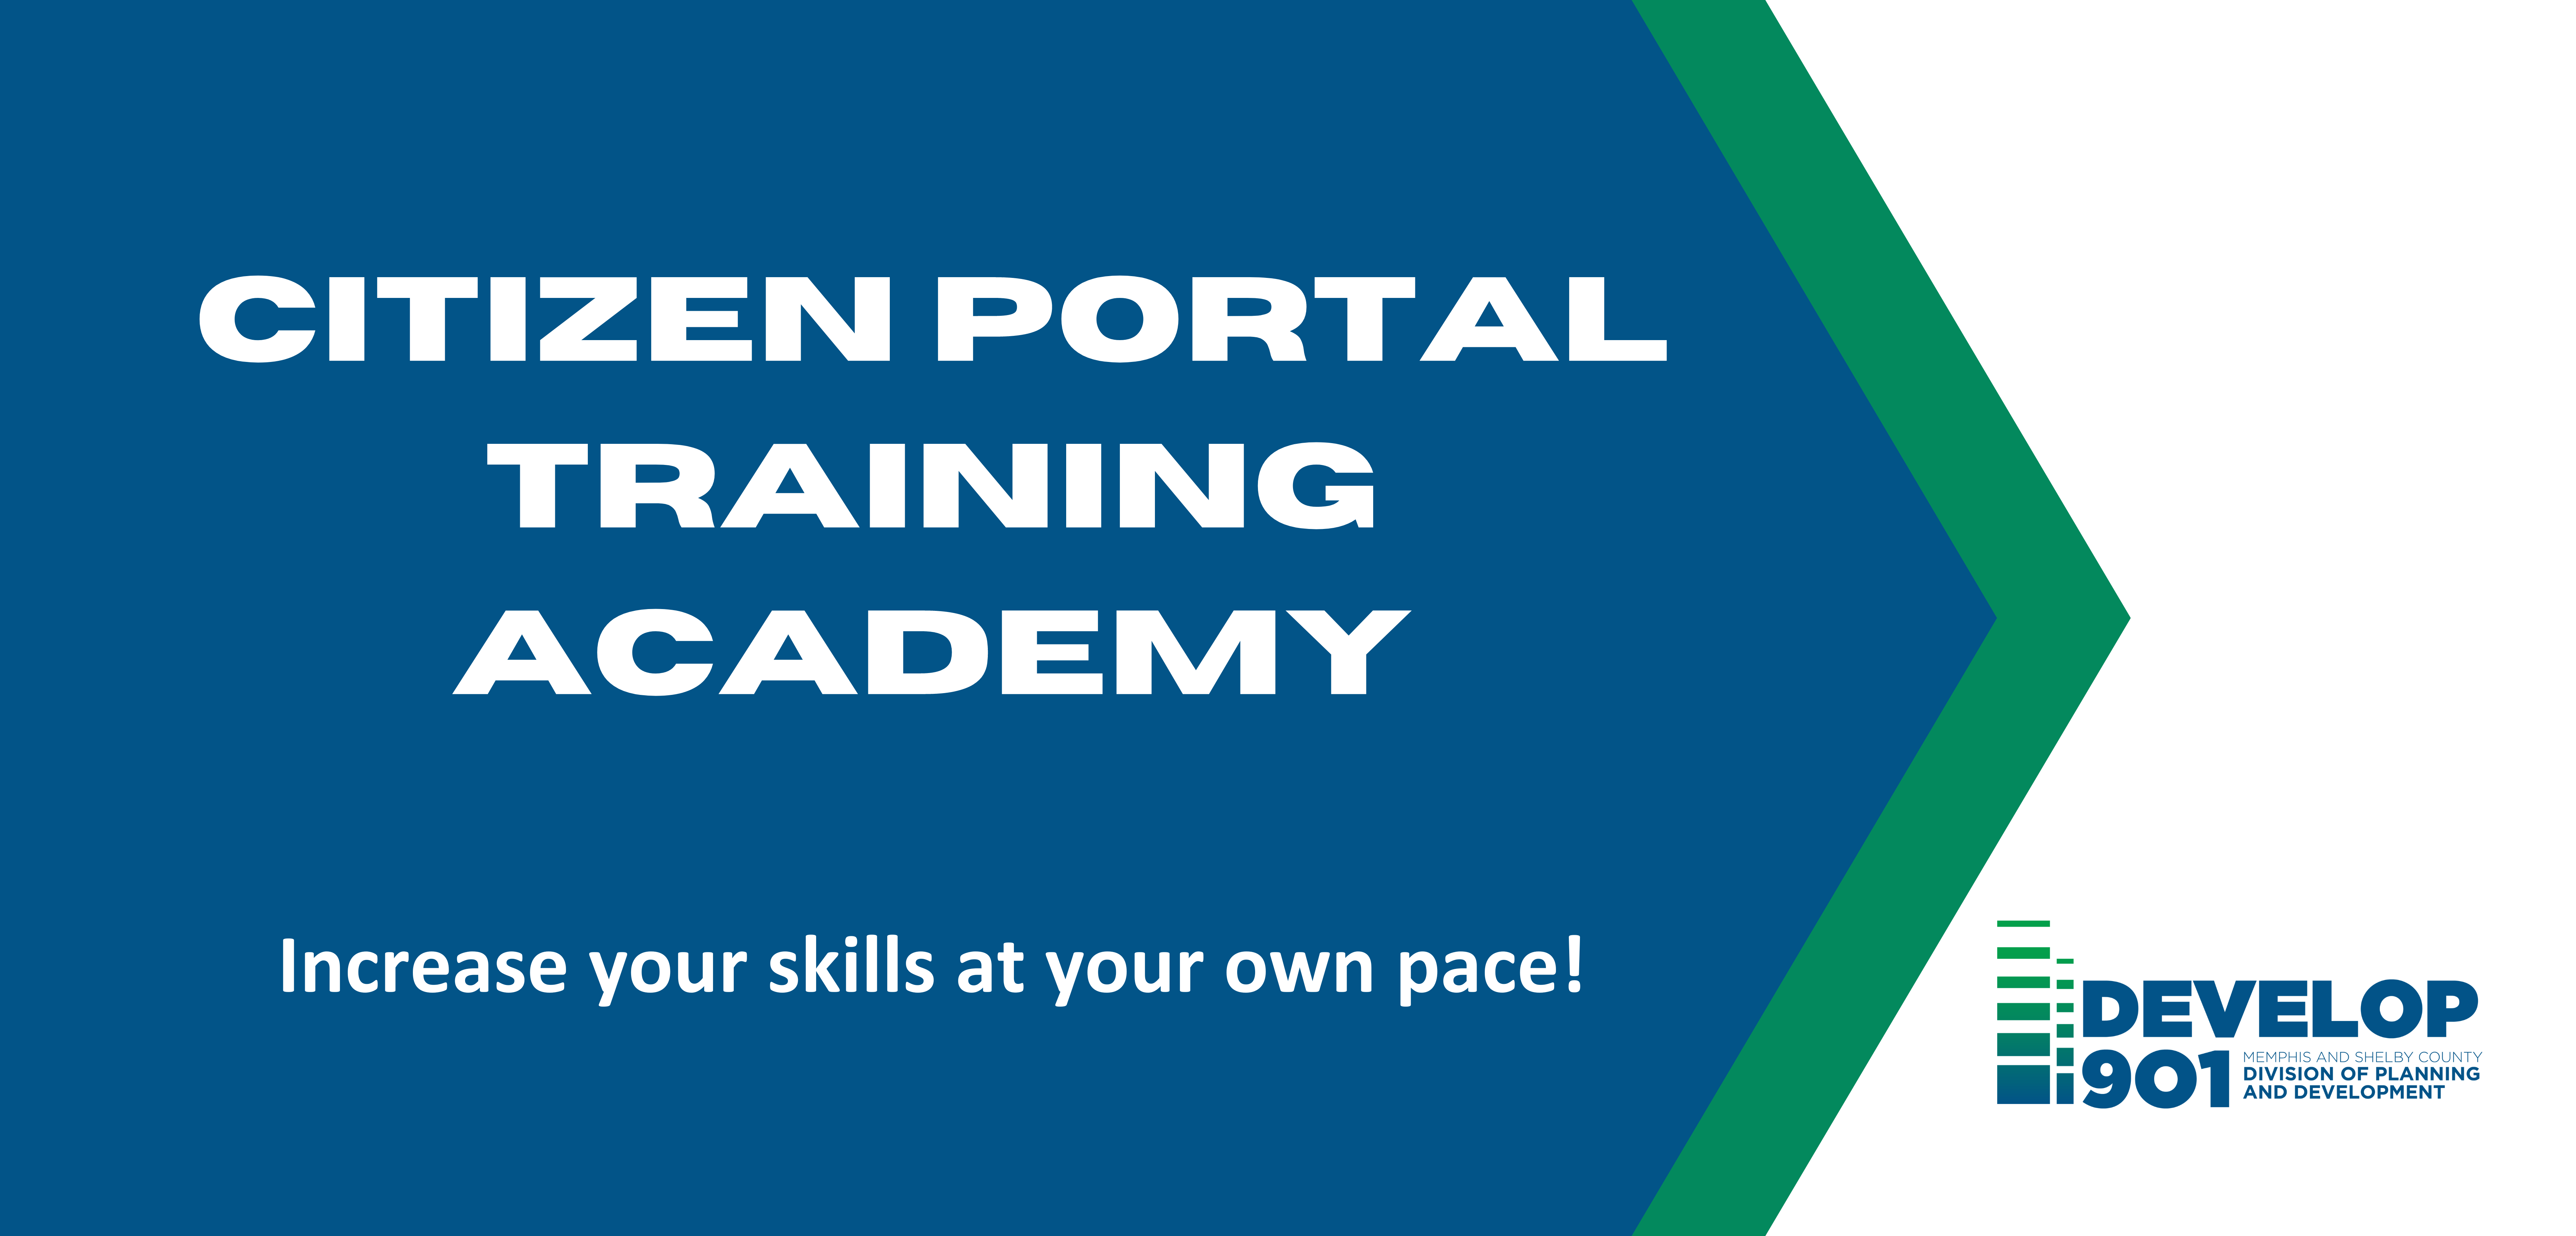 Citizen Portal Training Academy site image